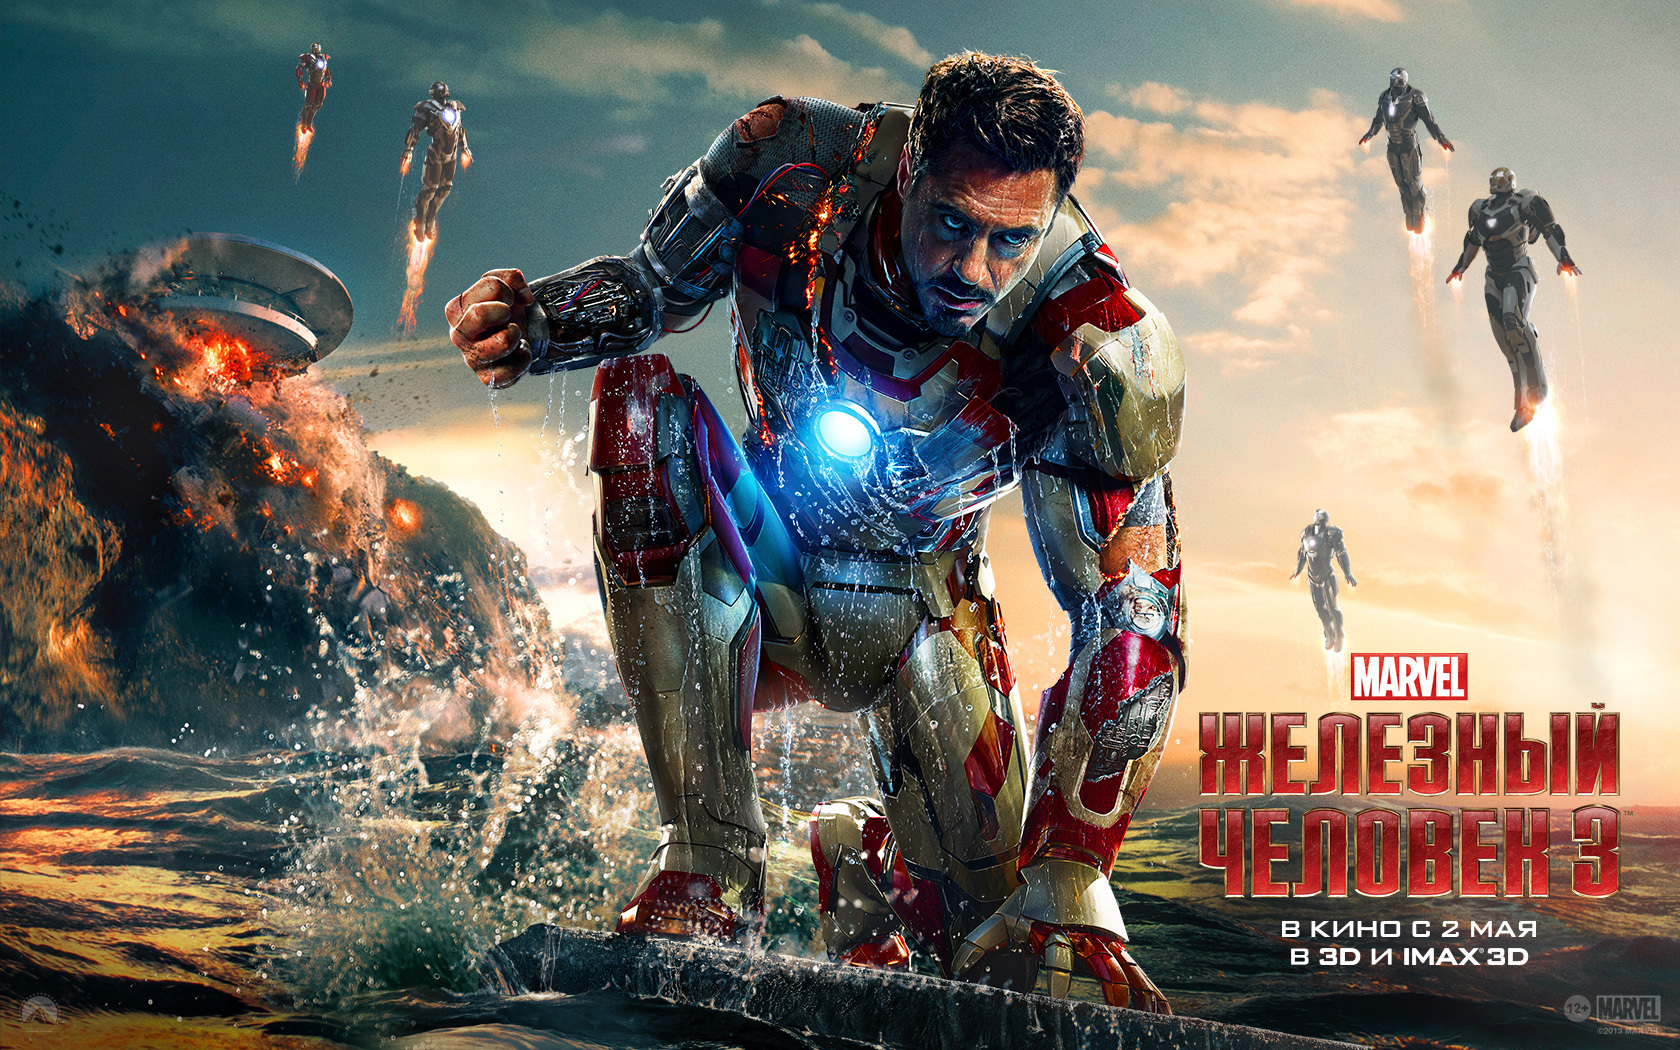 8k Iron Man Images